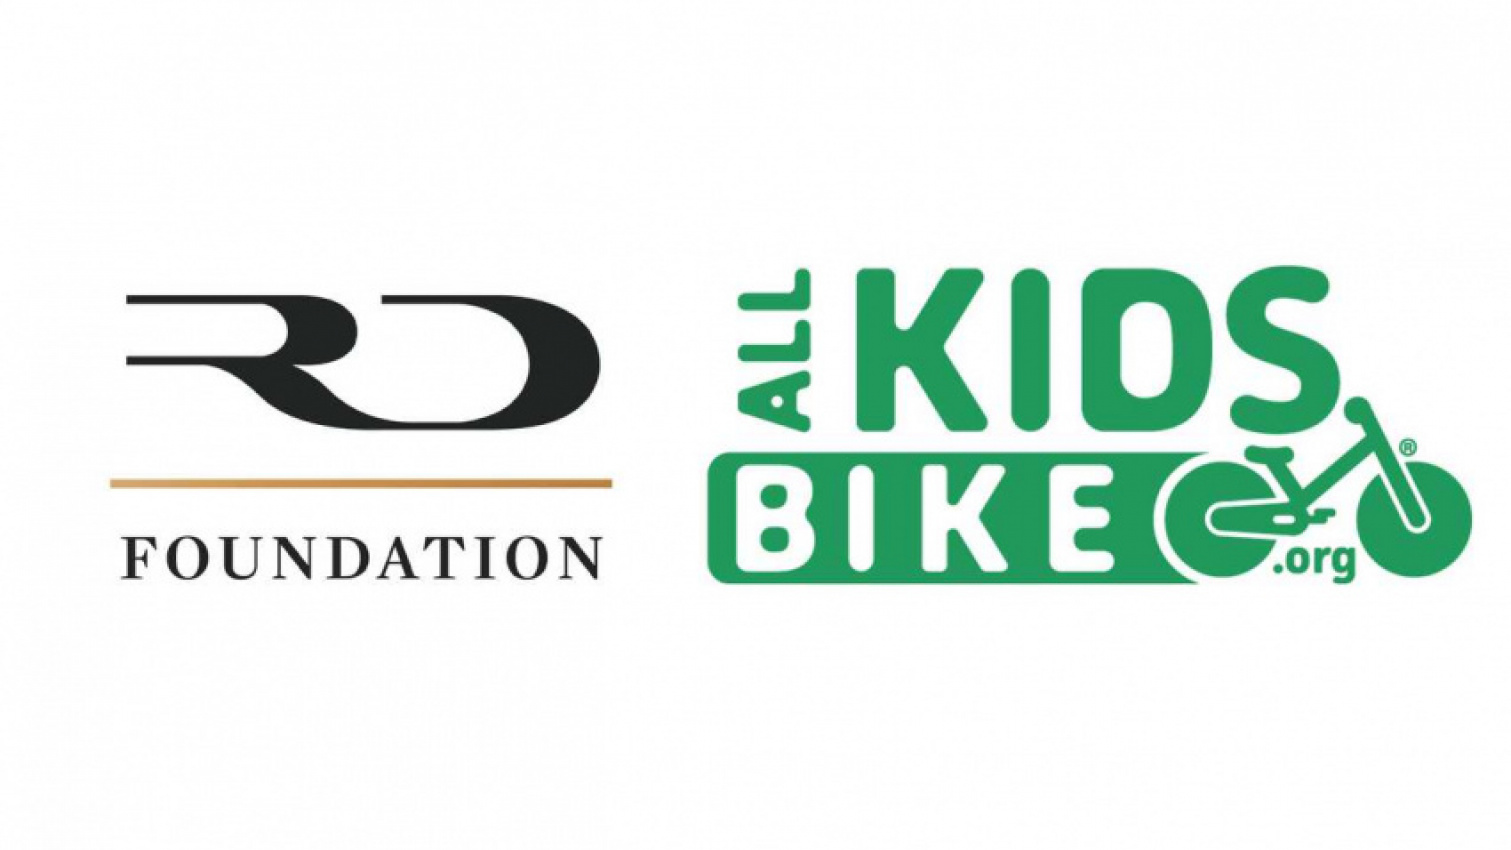 autos, cars, ram, ryan dungey foundation donate all kids bike programs to 5 schools